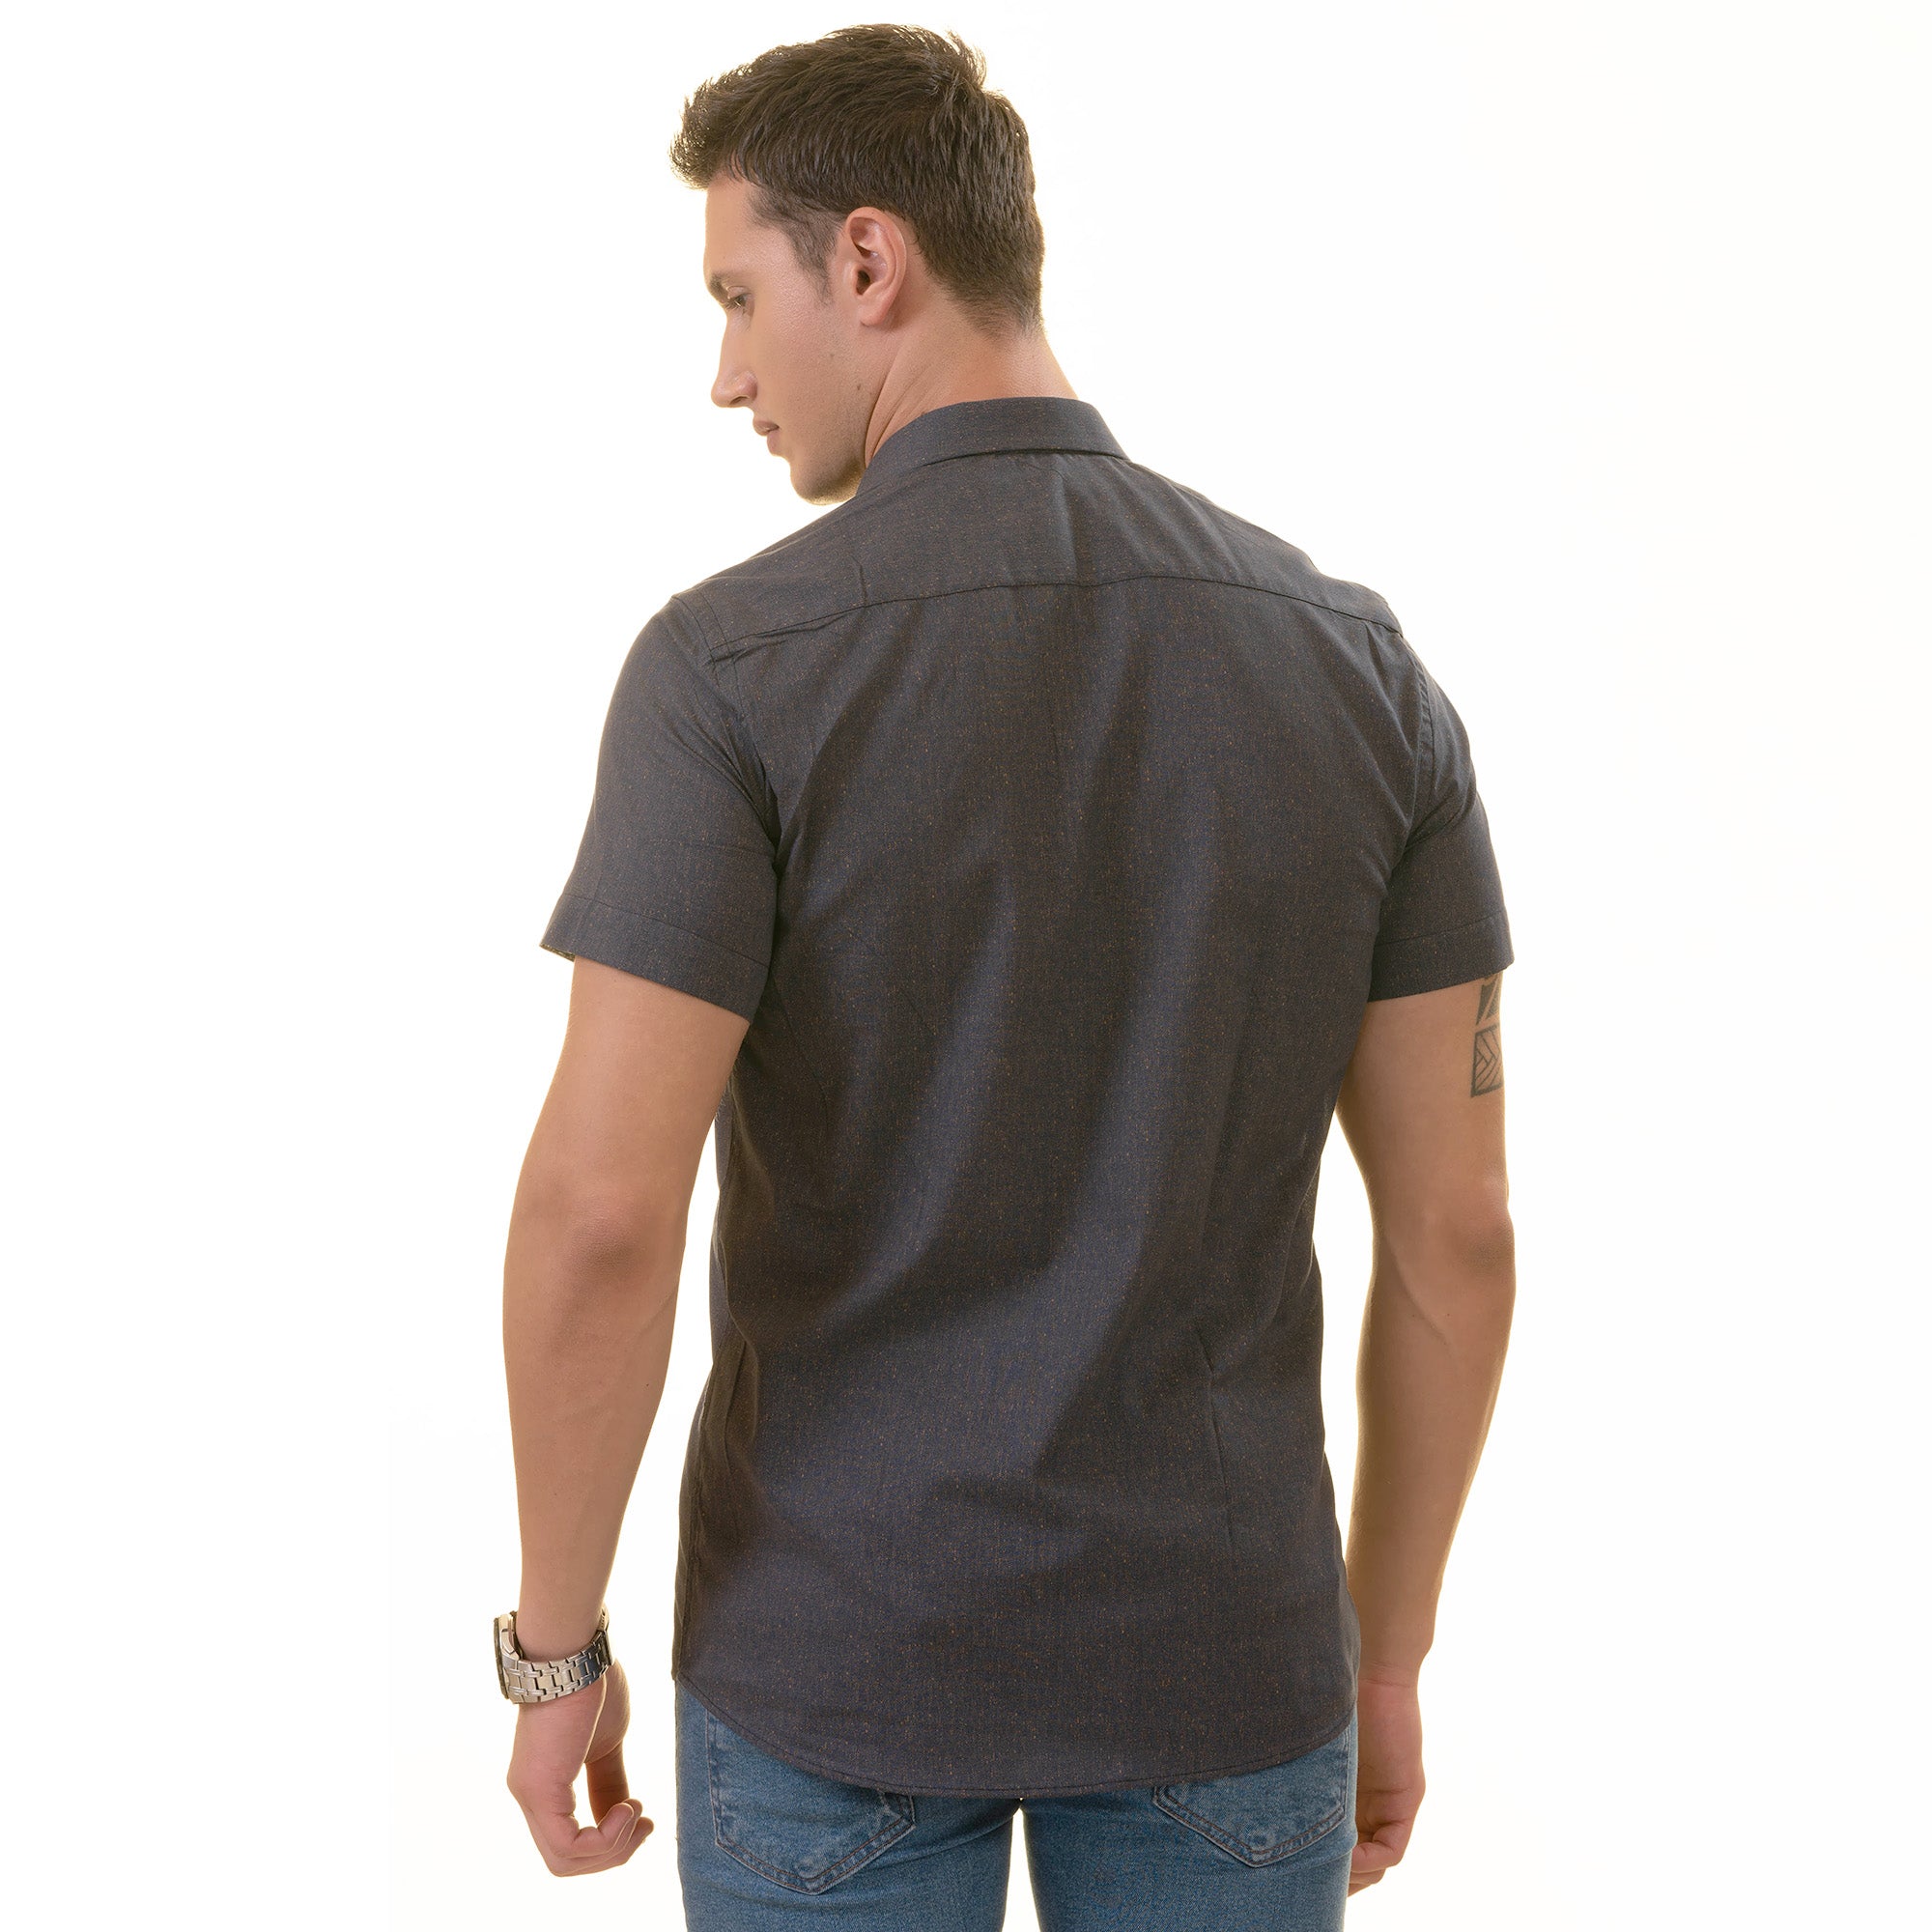 Navy Mustard Designer Paisley  Short Sleeve Button up Shirts -